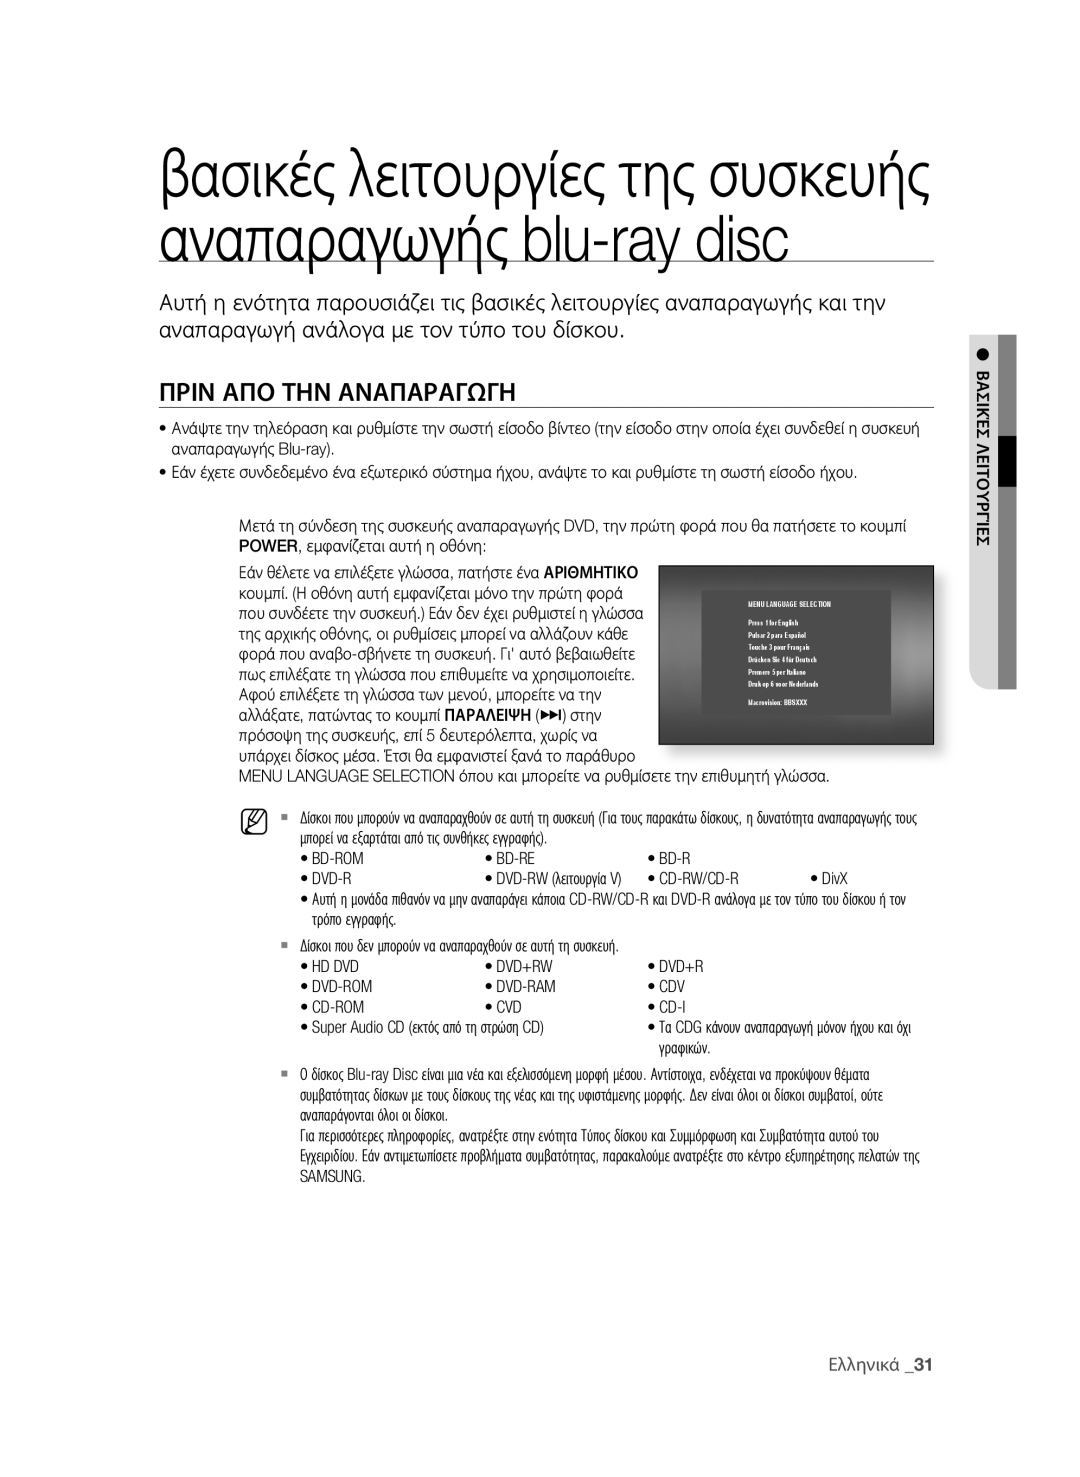 Samsung BD-P1580/EDC manual ΠριΝ ΑΠο ΤηΝ ΑΝΑΠΑρΑΓΩΓη, βασικές λειτουργίες της συσκευής αναπαραγωγής blu-ray disc, Ελληνικά 